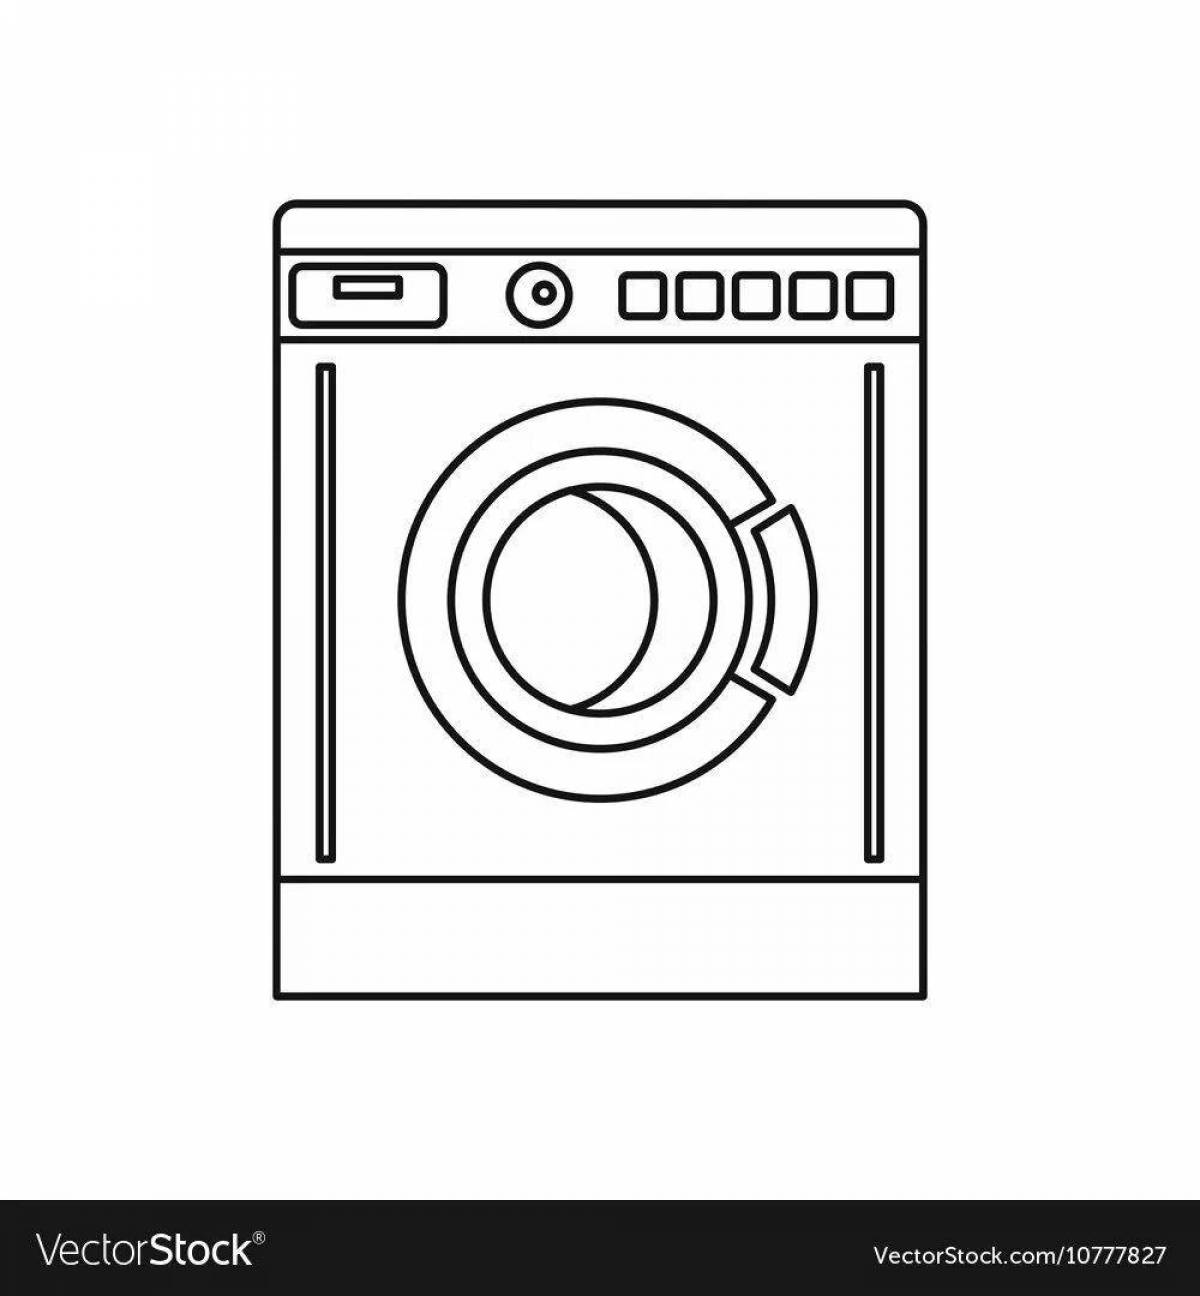 Amazing washing machine coloring page